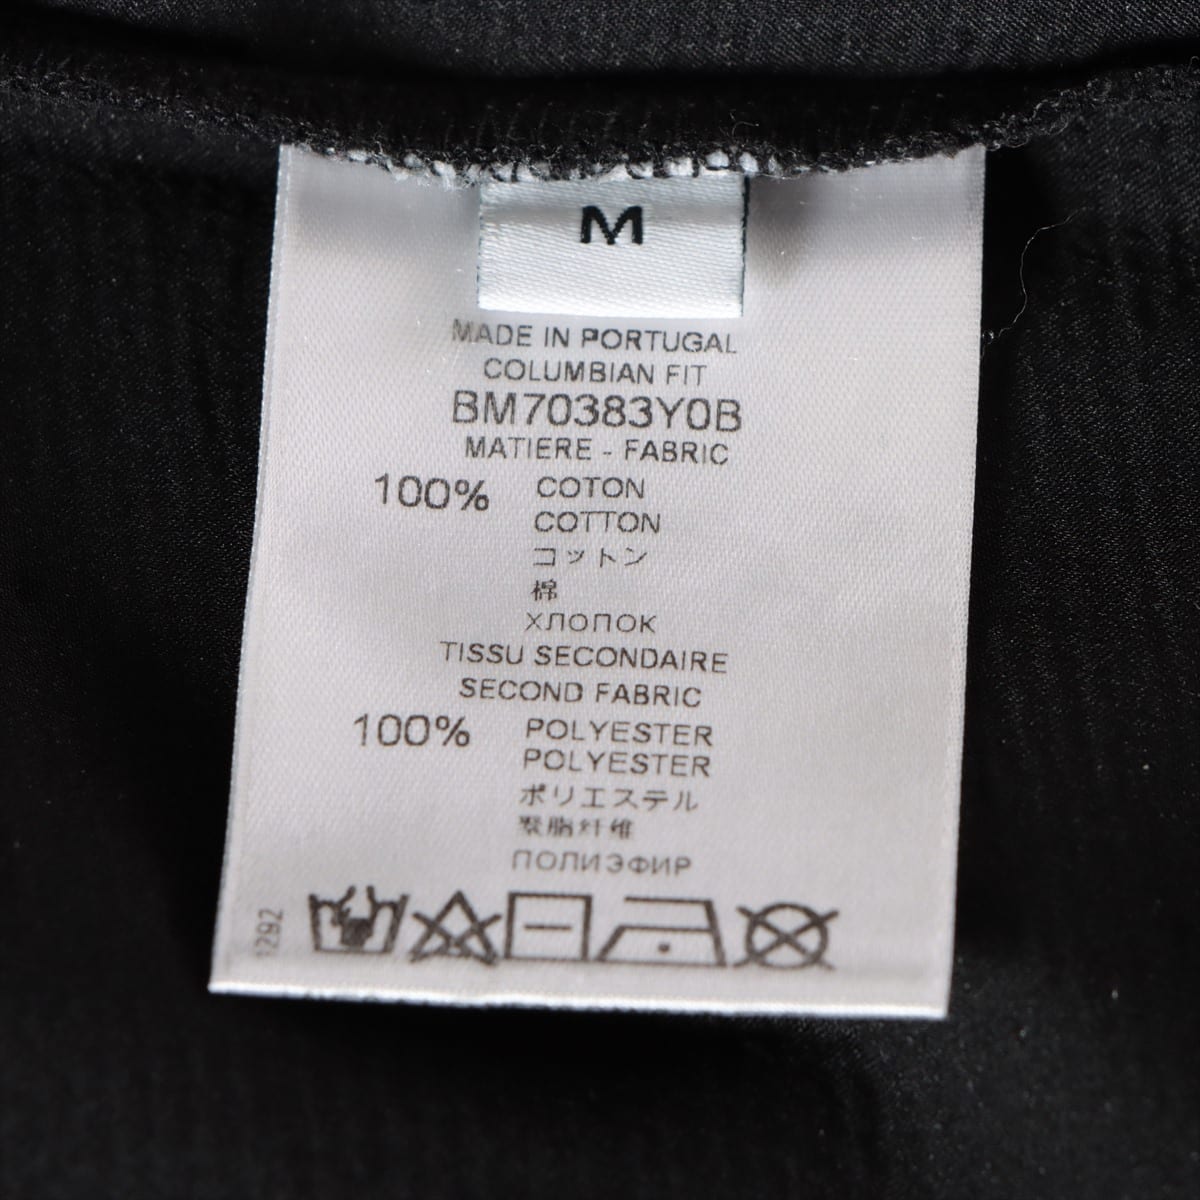 Givenchy Cotton T-shirt M Men's Black  Destroyed crash processing Logo